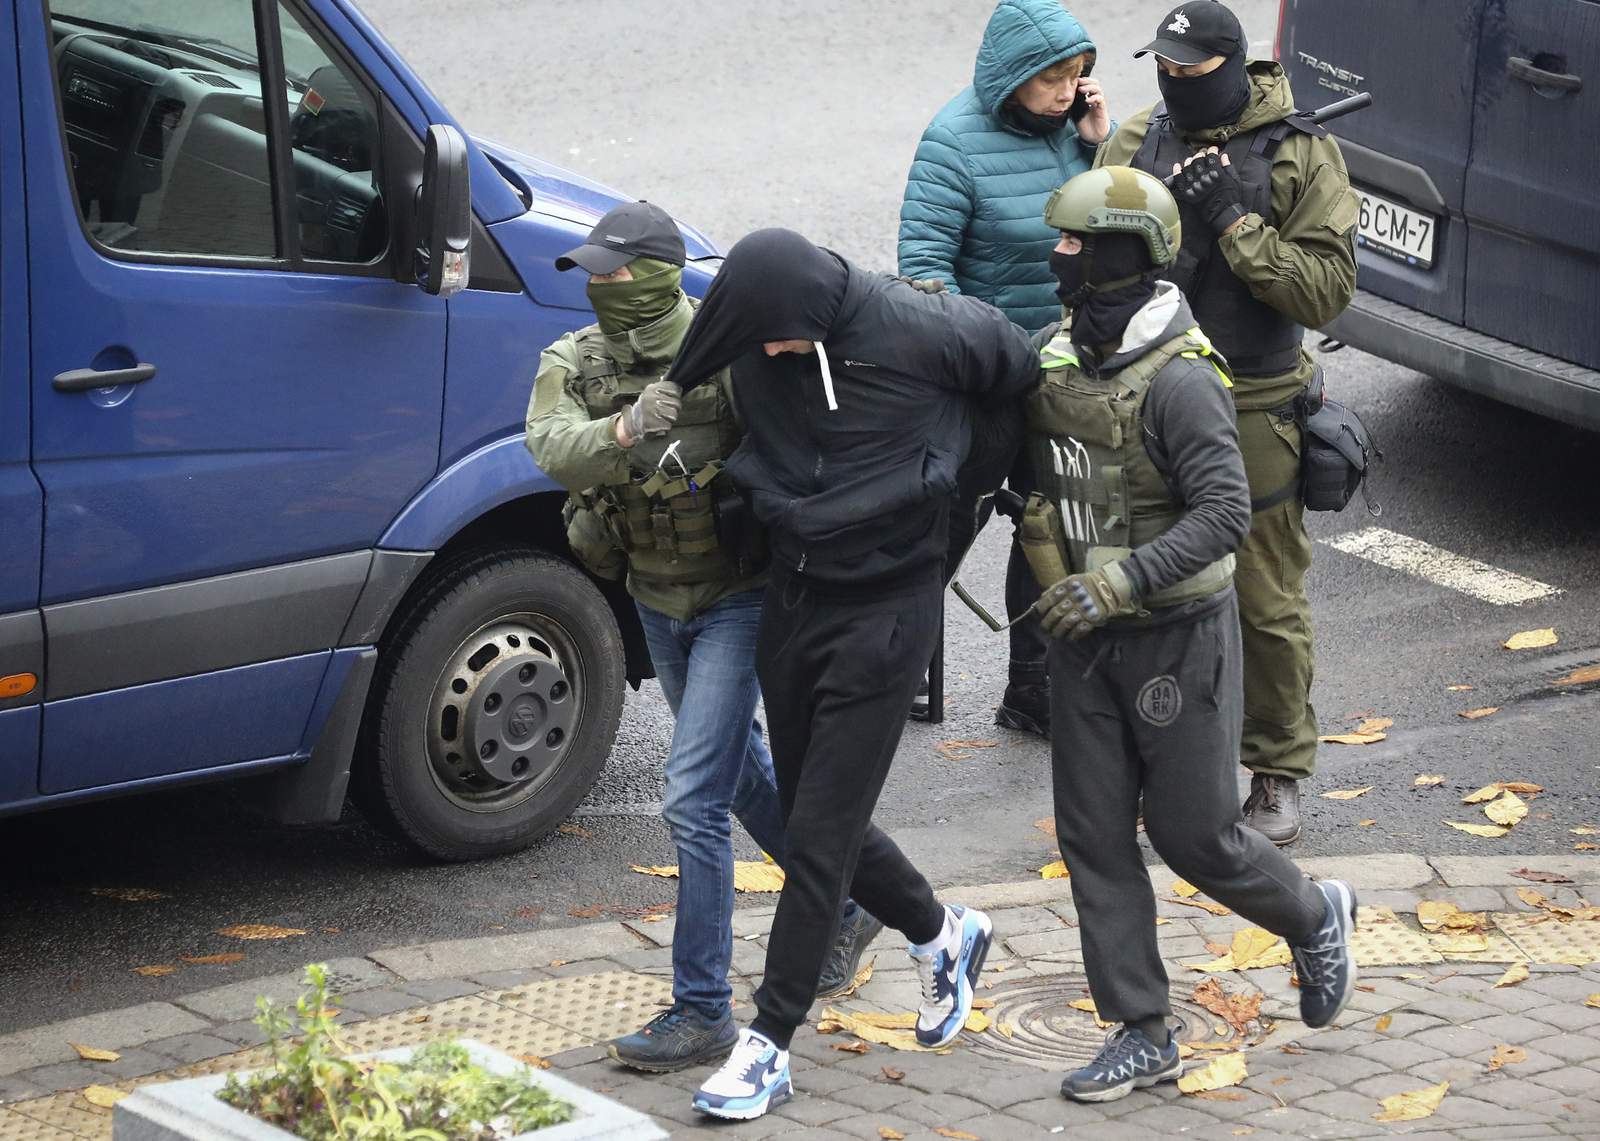 Club-wielding police in Belarus arrest nearly 400 protesters